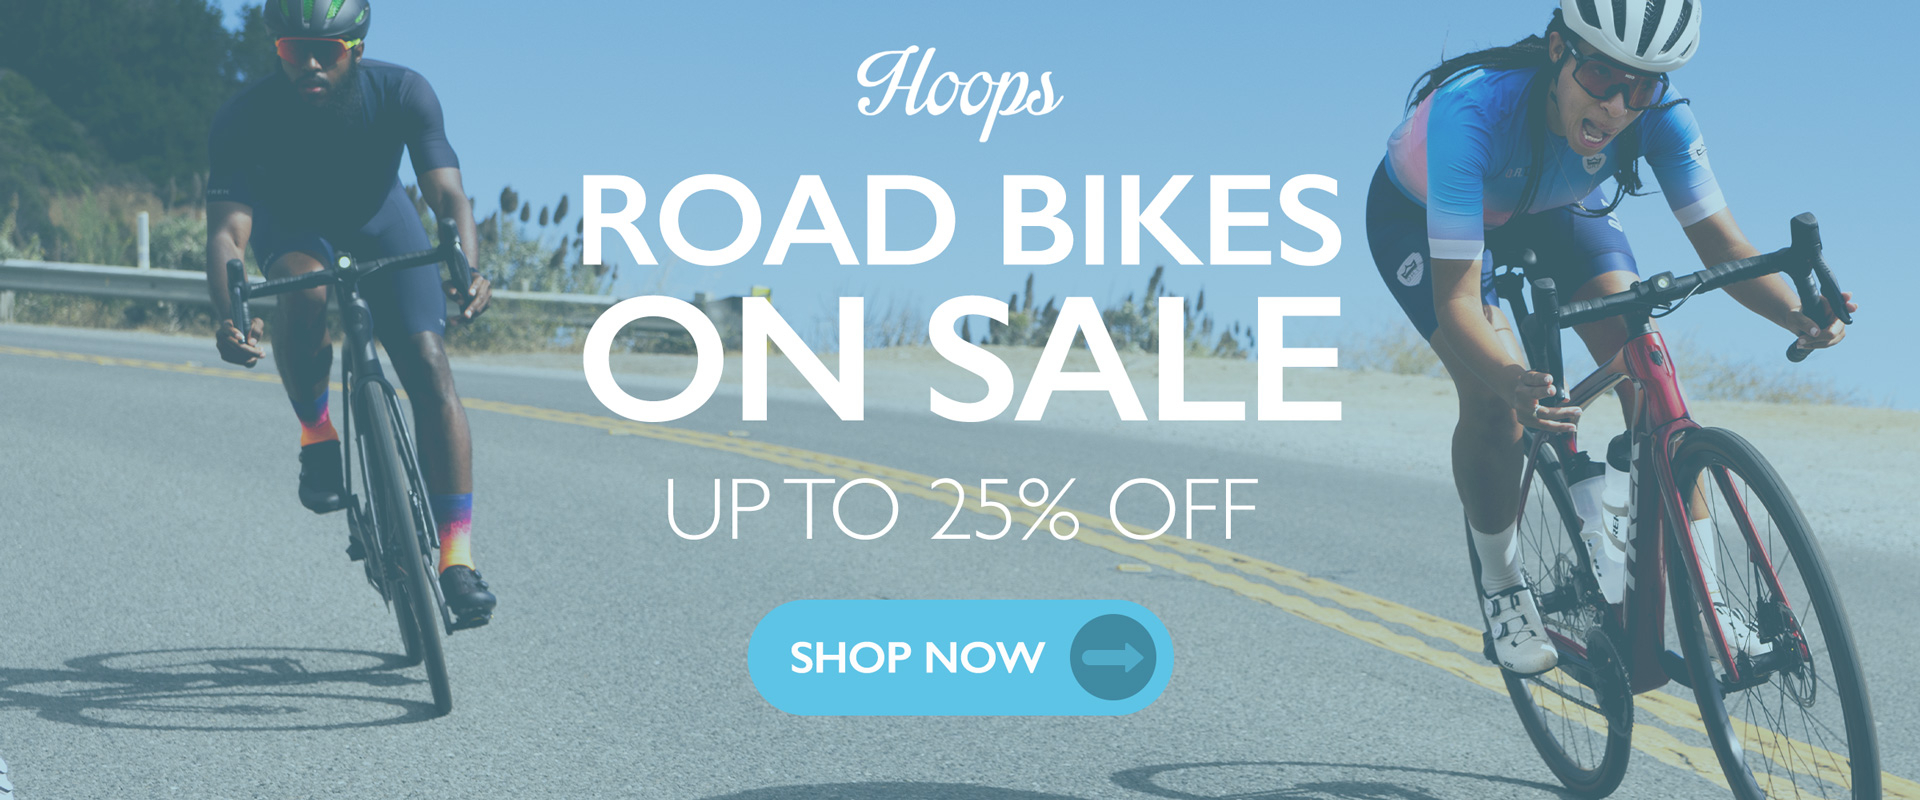 Road Bike Sale